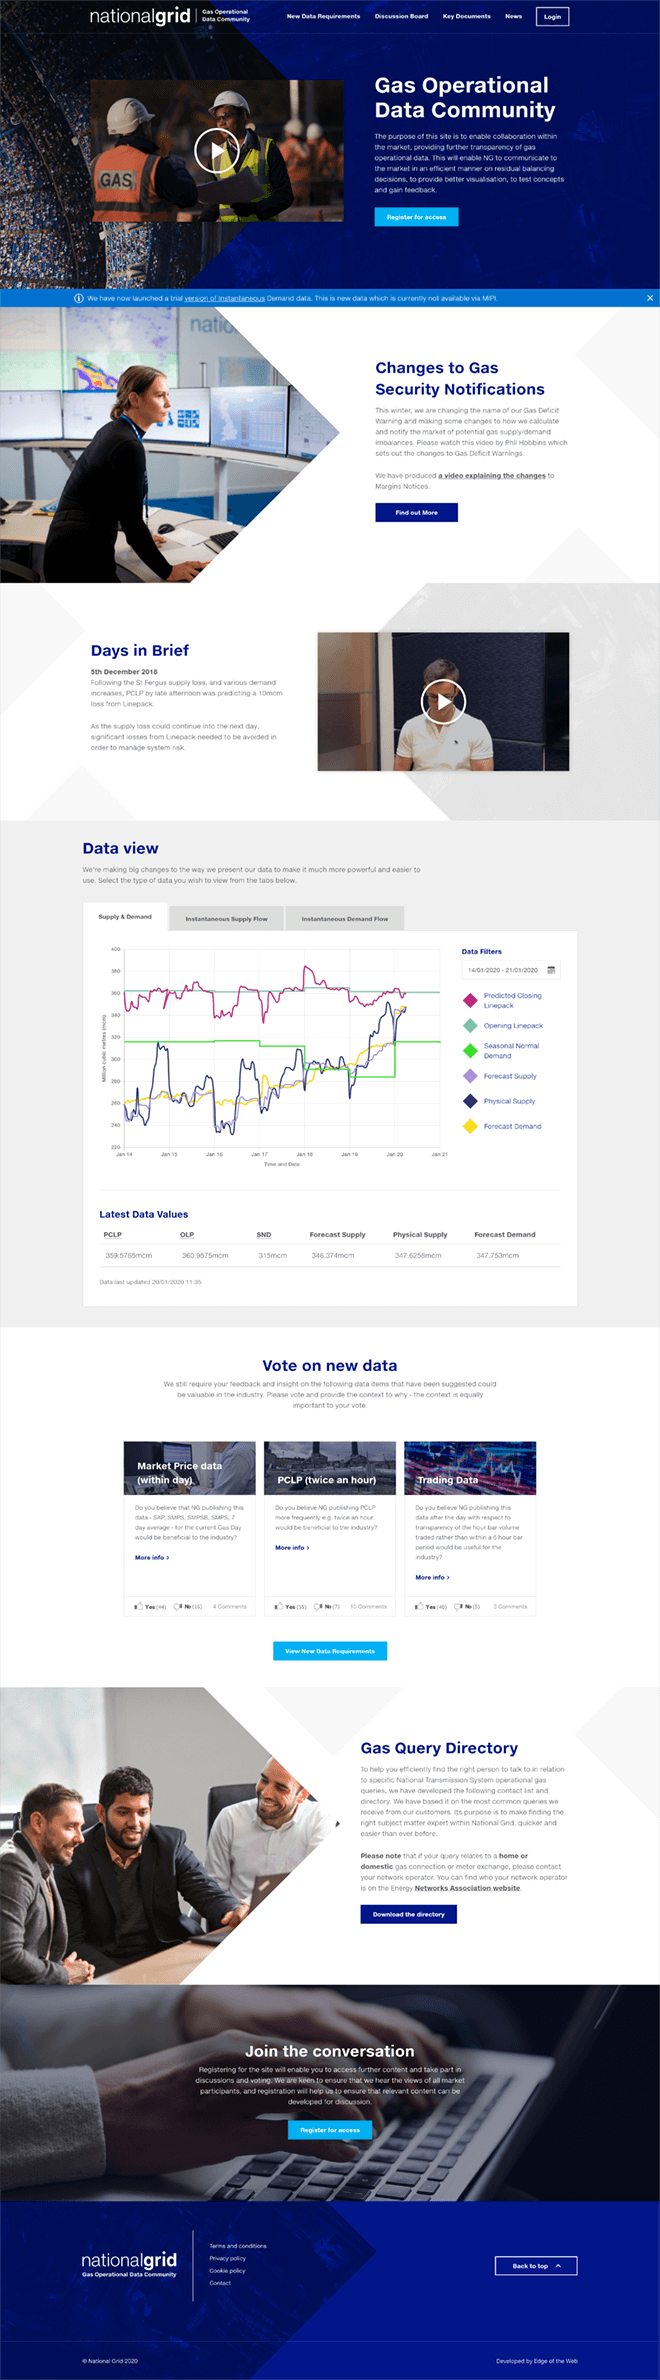 Screenshot of the National Grid Data Community homepage